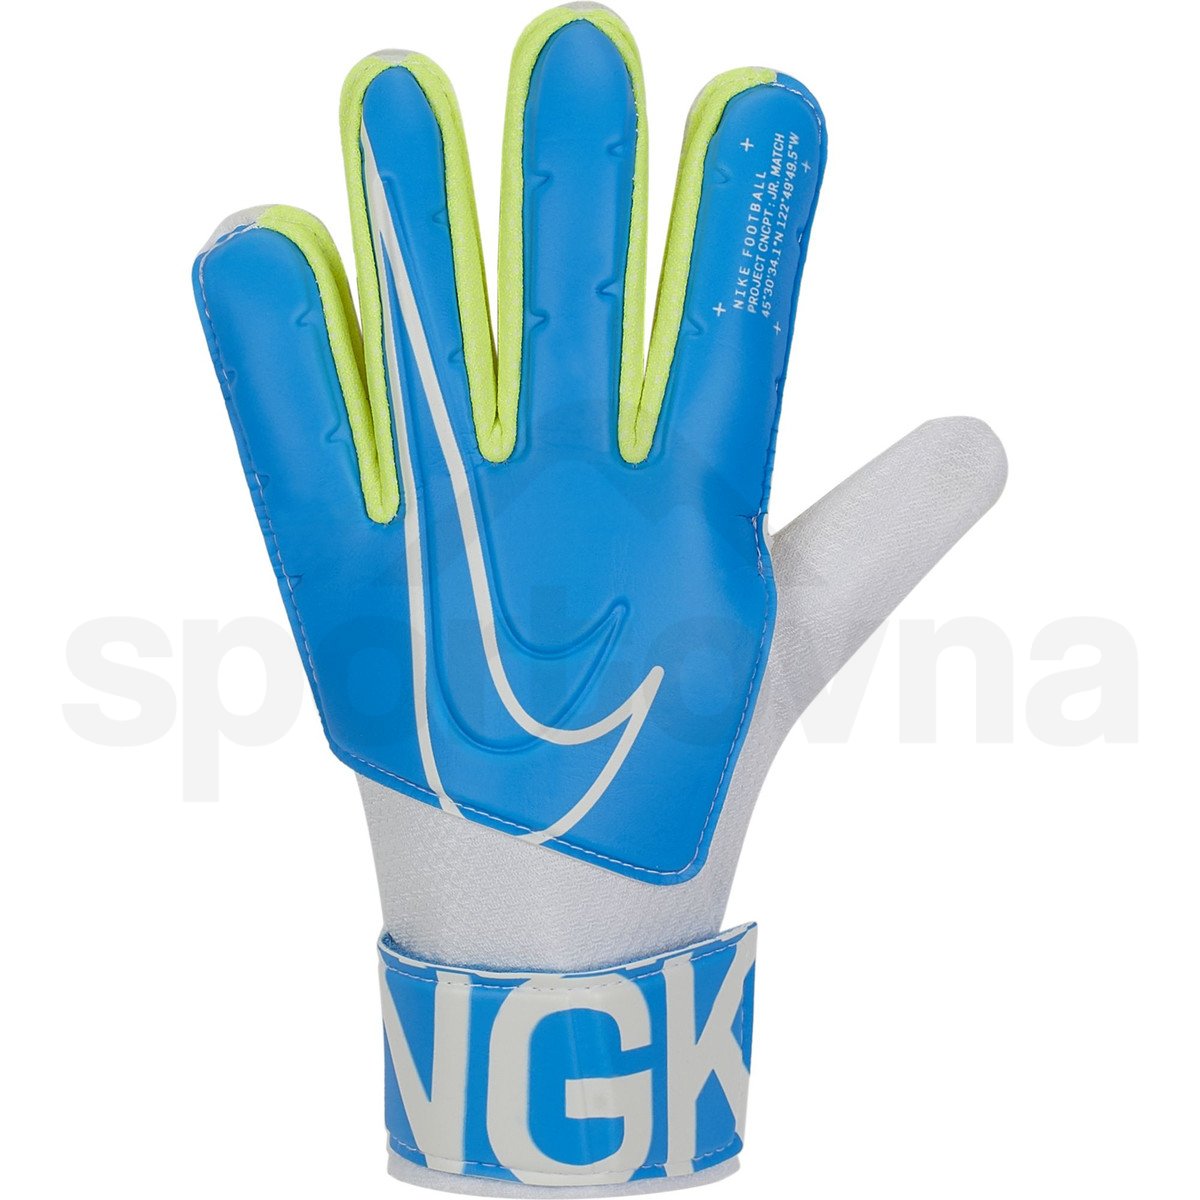 Rukavice Nike GK Match J - modrá/bílá